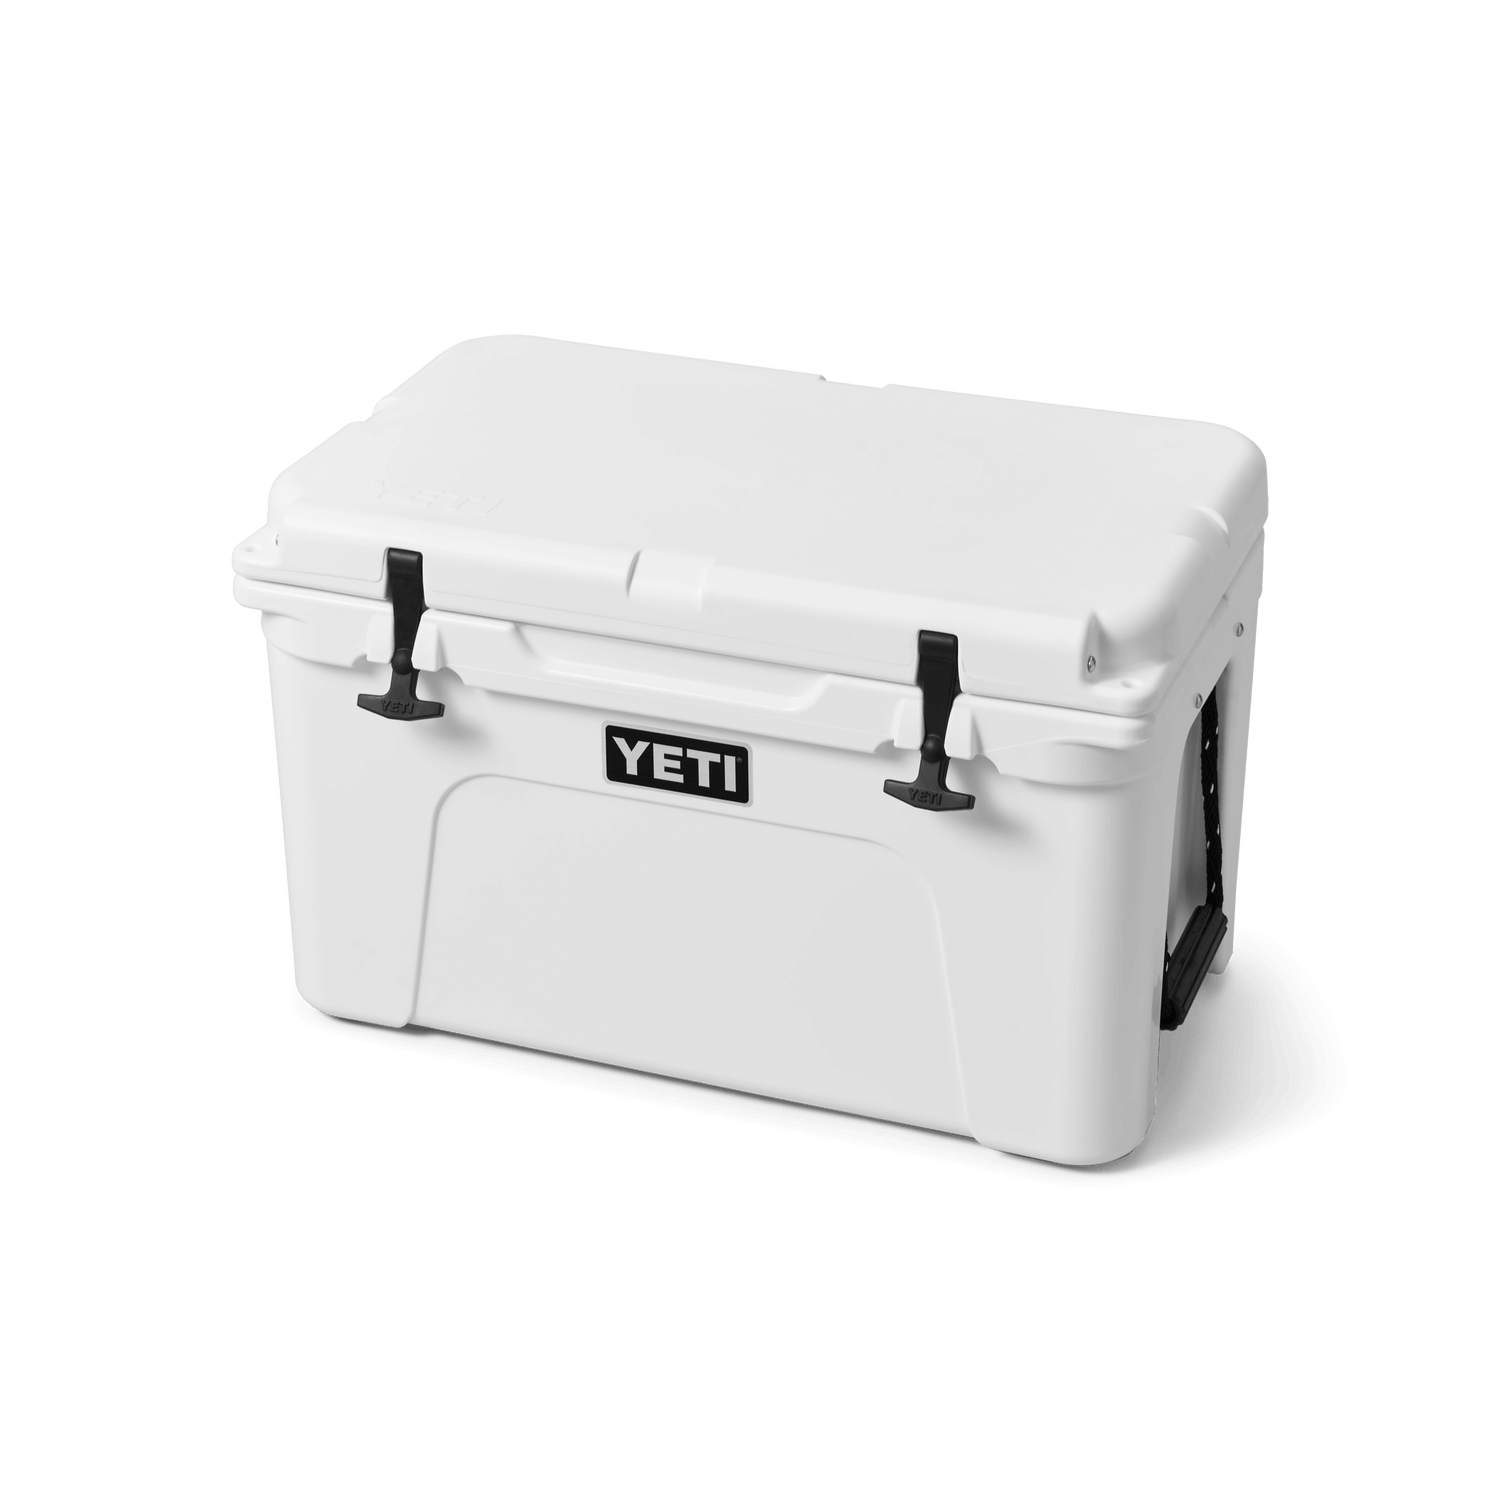 YETI Tundra® 45 Cool Box White